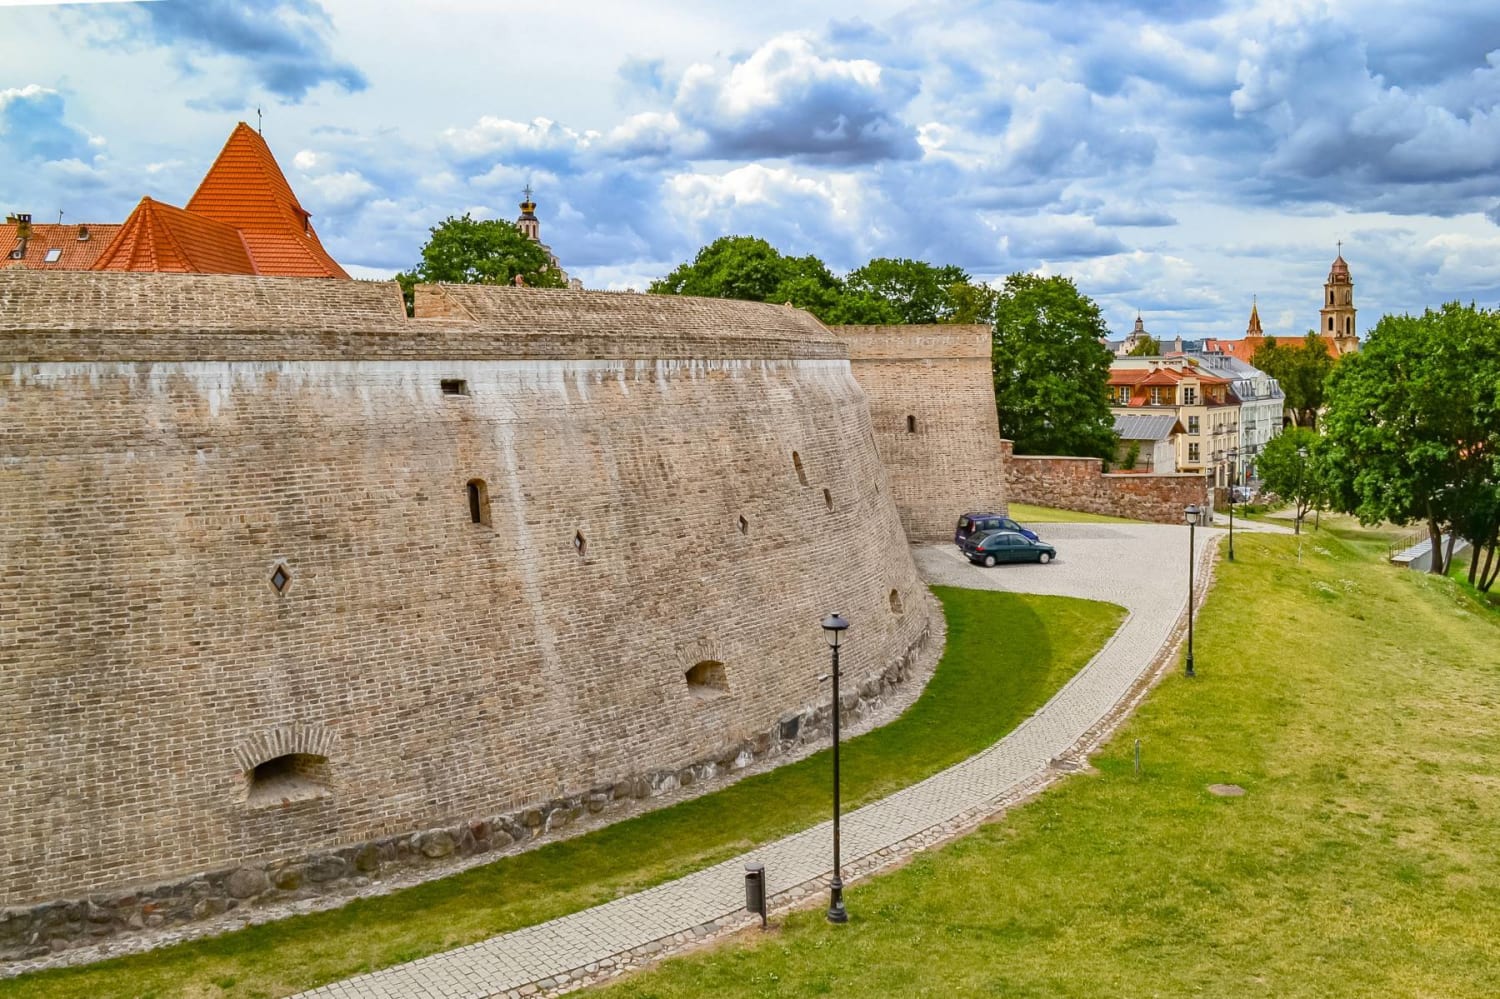 Vilnius artillery bastion – A museum of historical artifacts